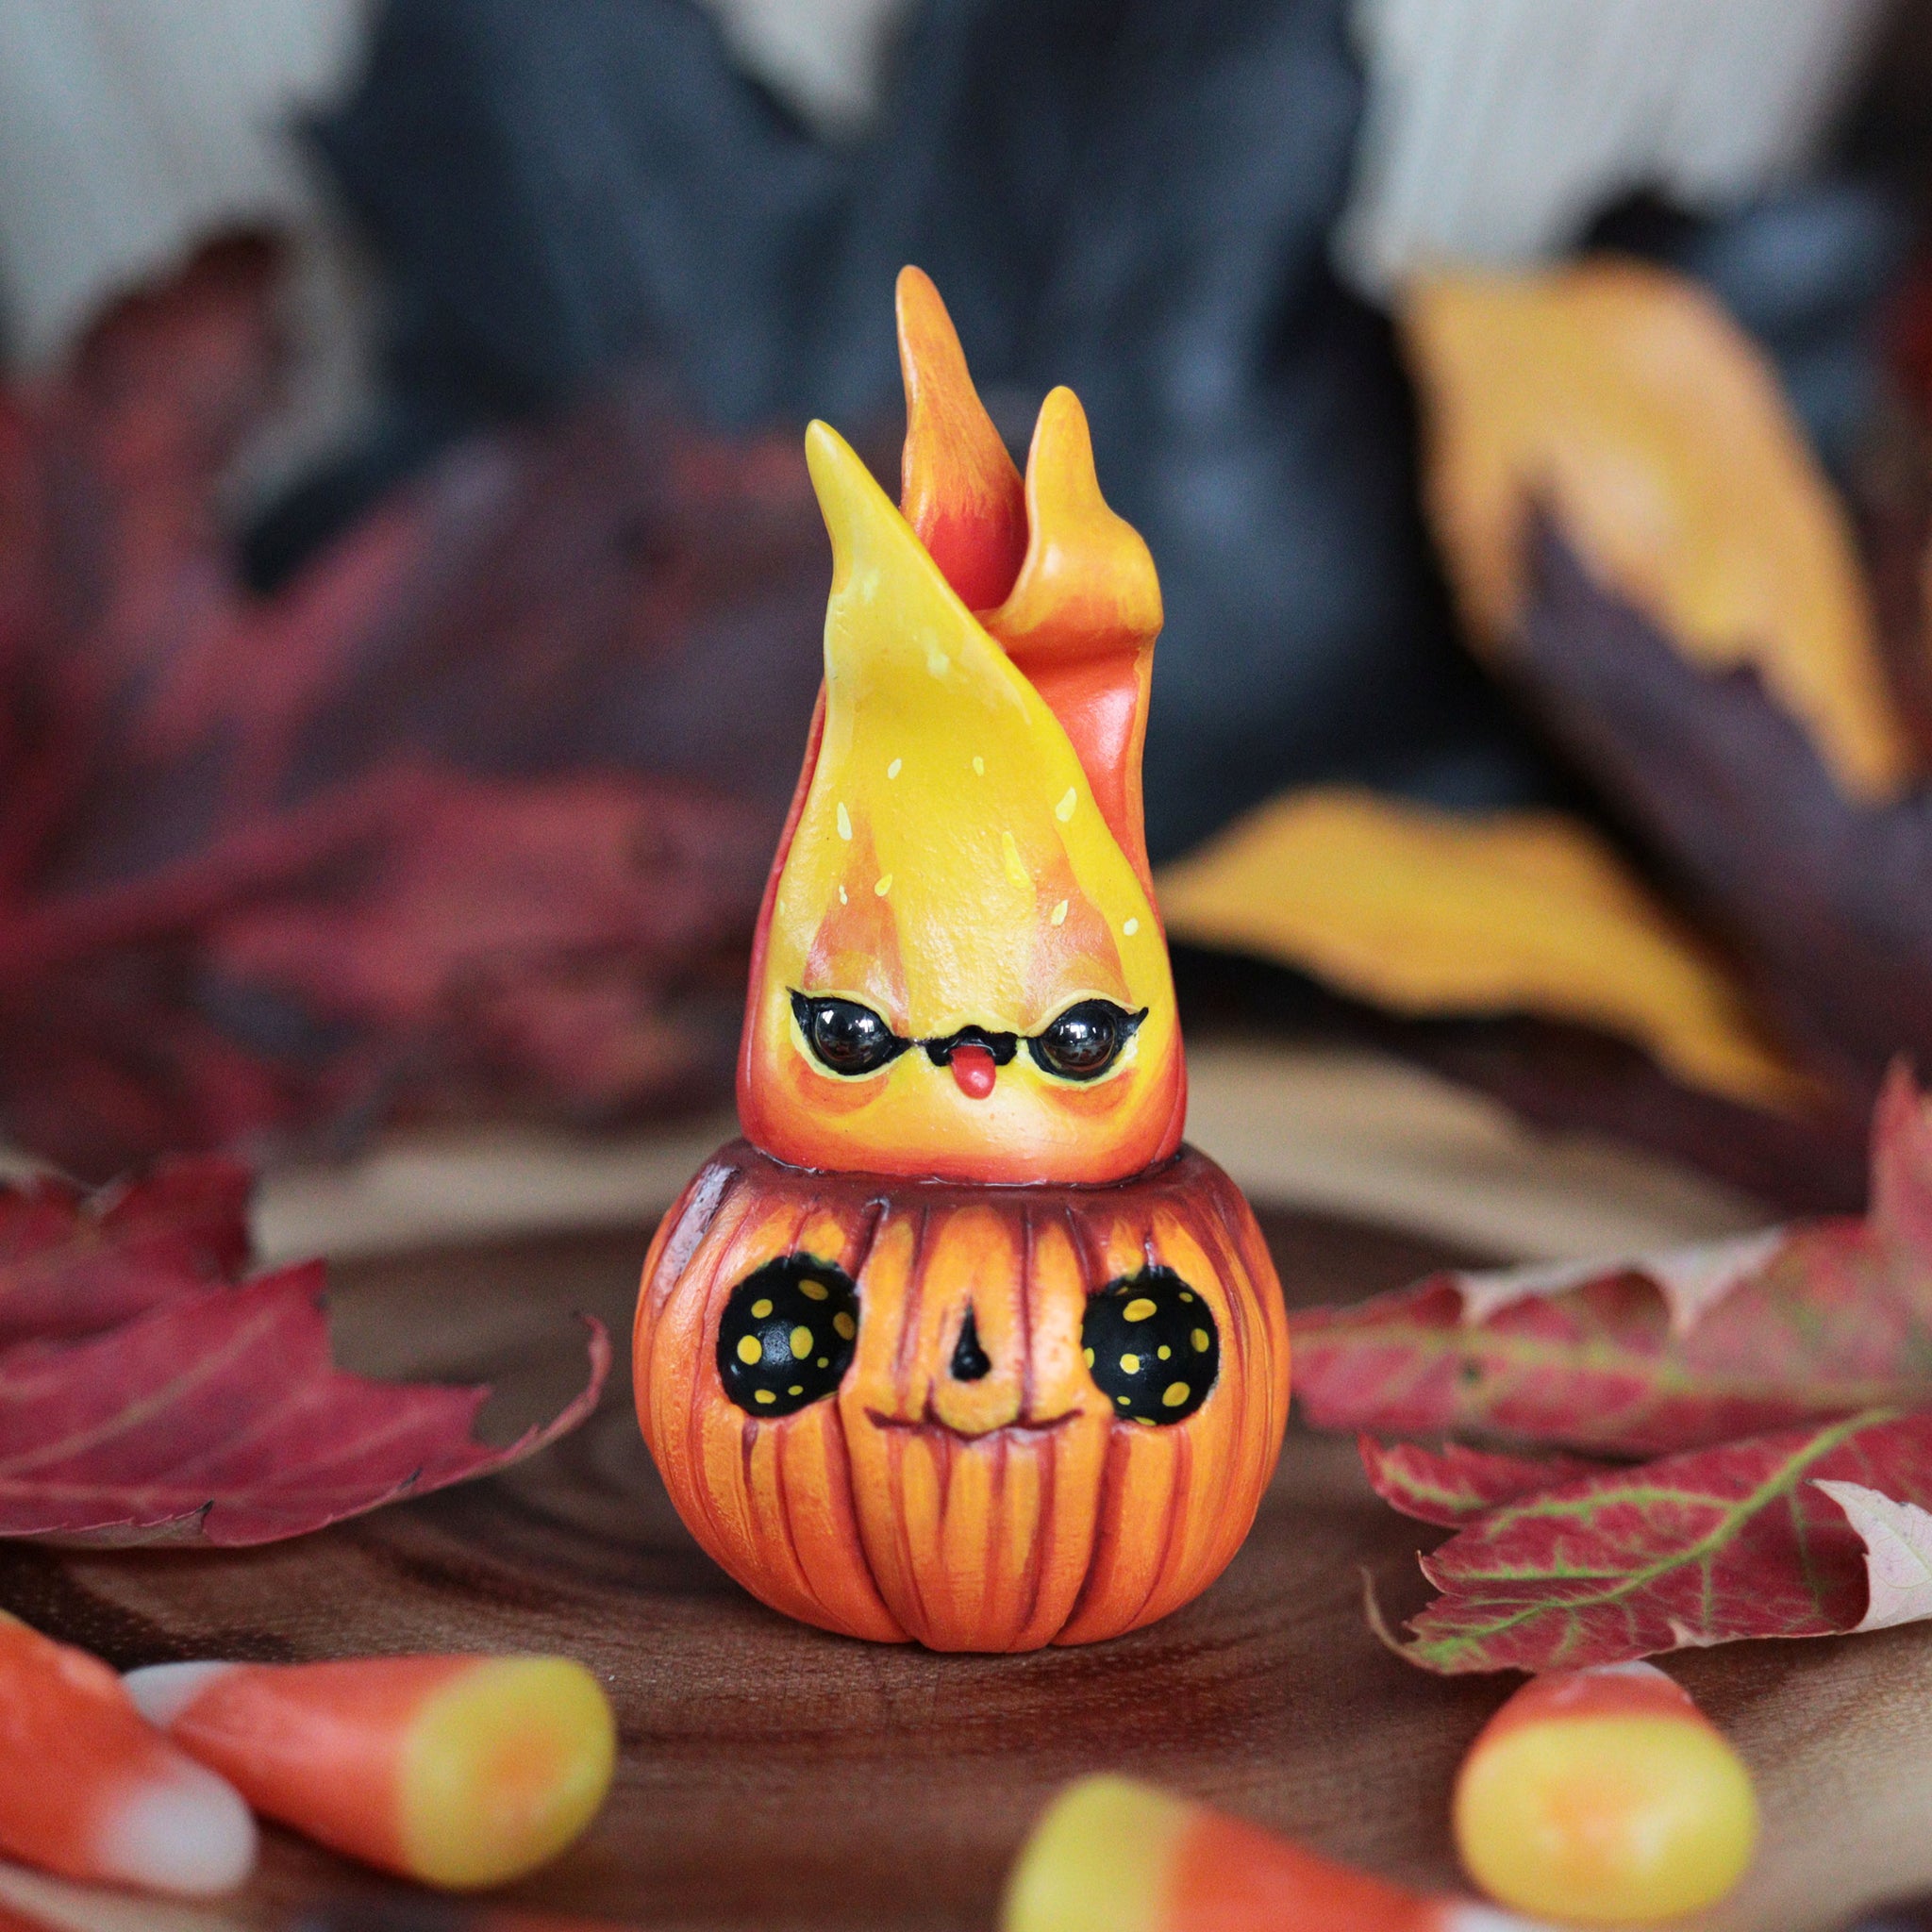 Flaming Pumpkin Mischief Figurine